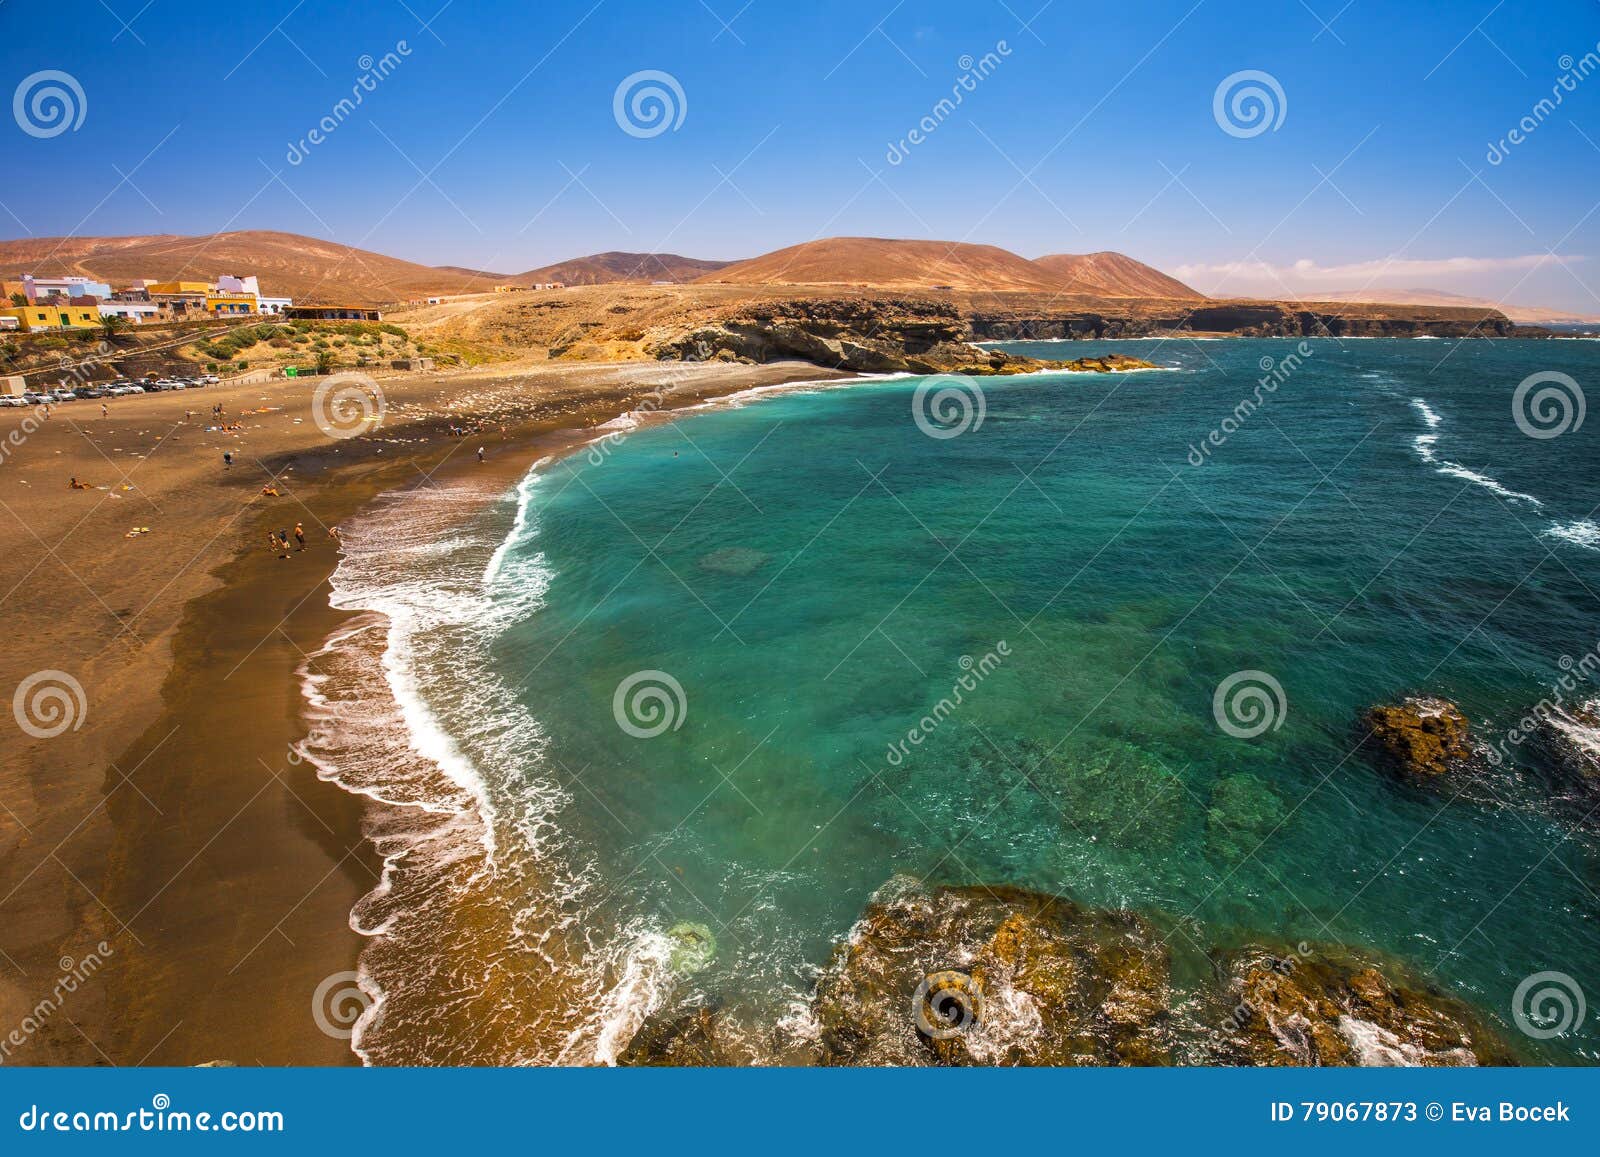 ajuy beach with vulcanic mountains on fuerteventura island